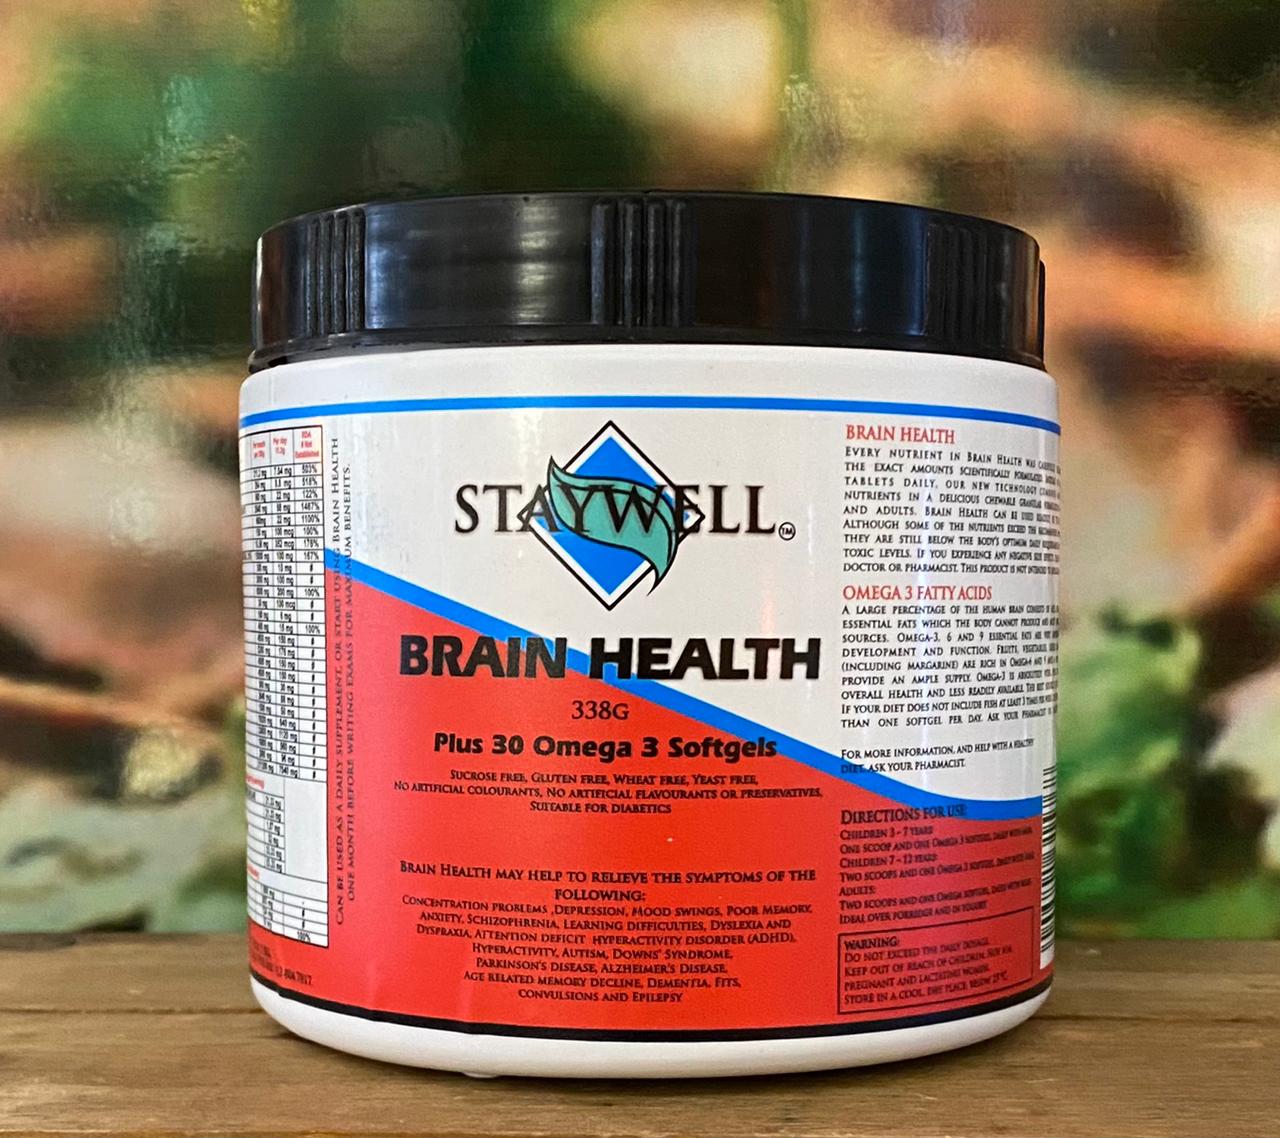 Staywell Brain Health 338g